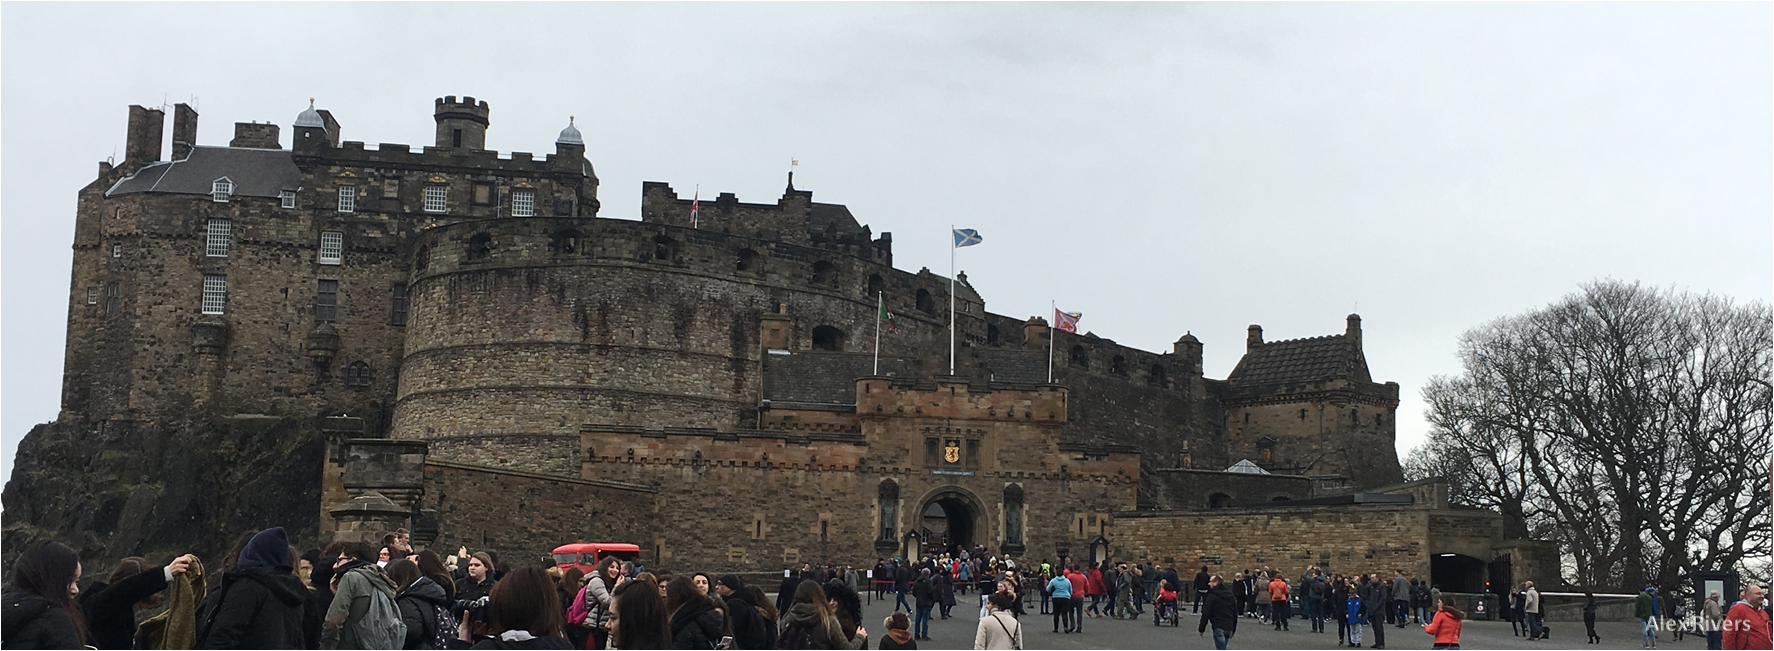 Edinburgh castle exterior